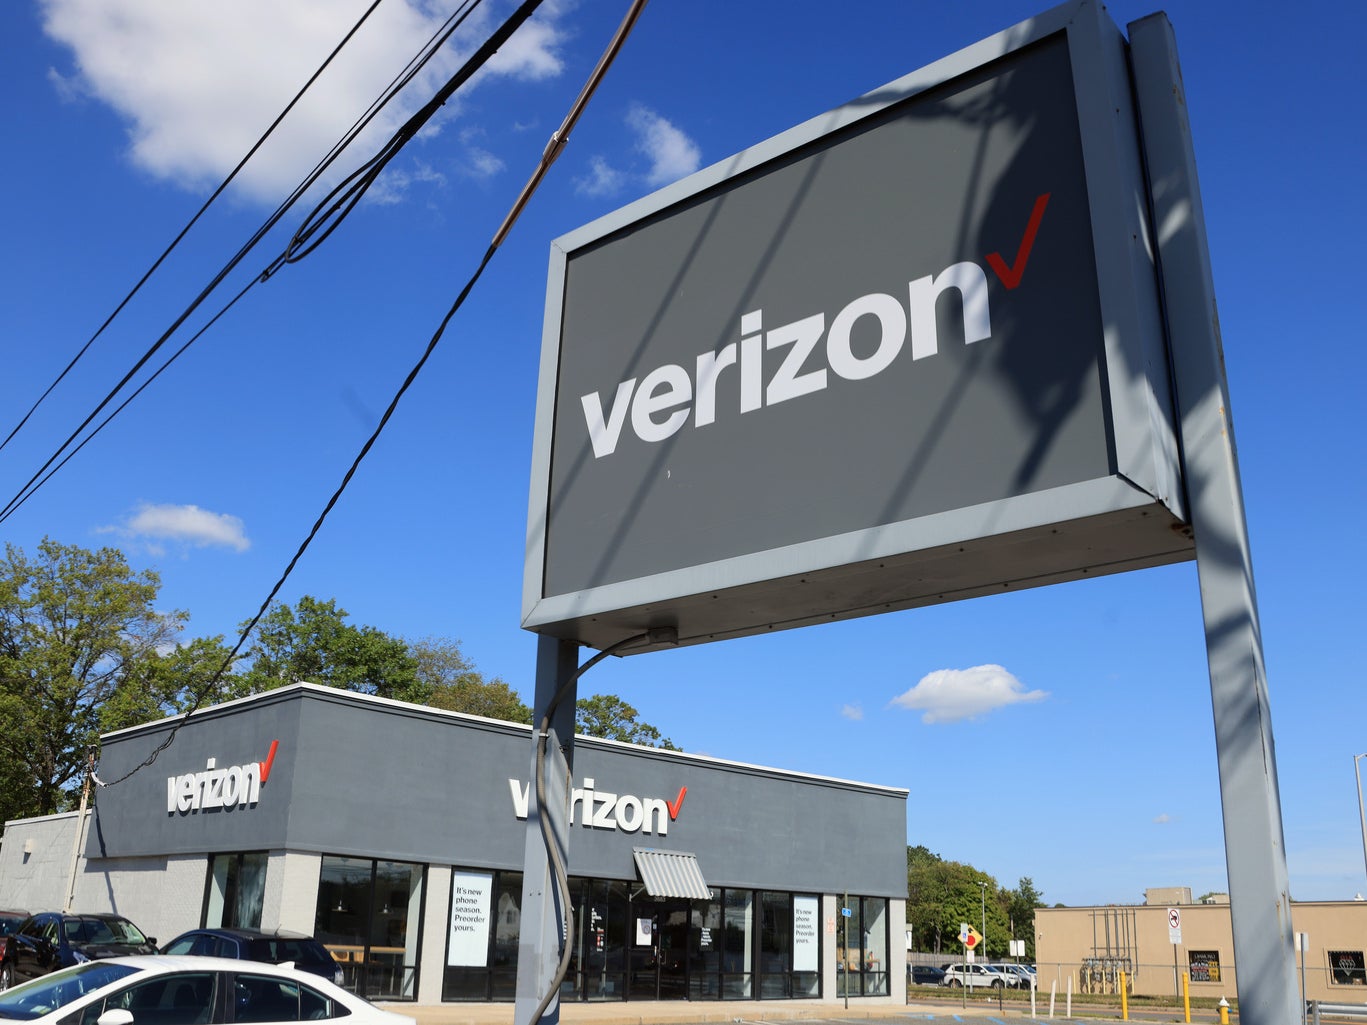 Verizon Stores Near Michigan - Summary of the information provided